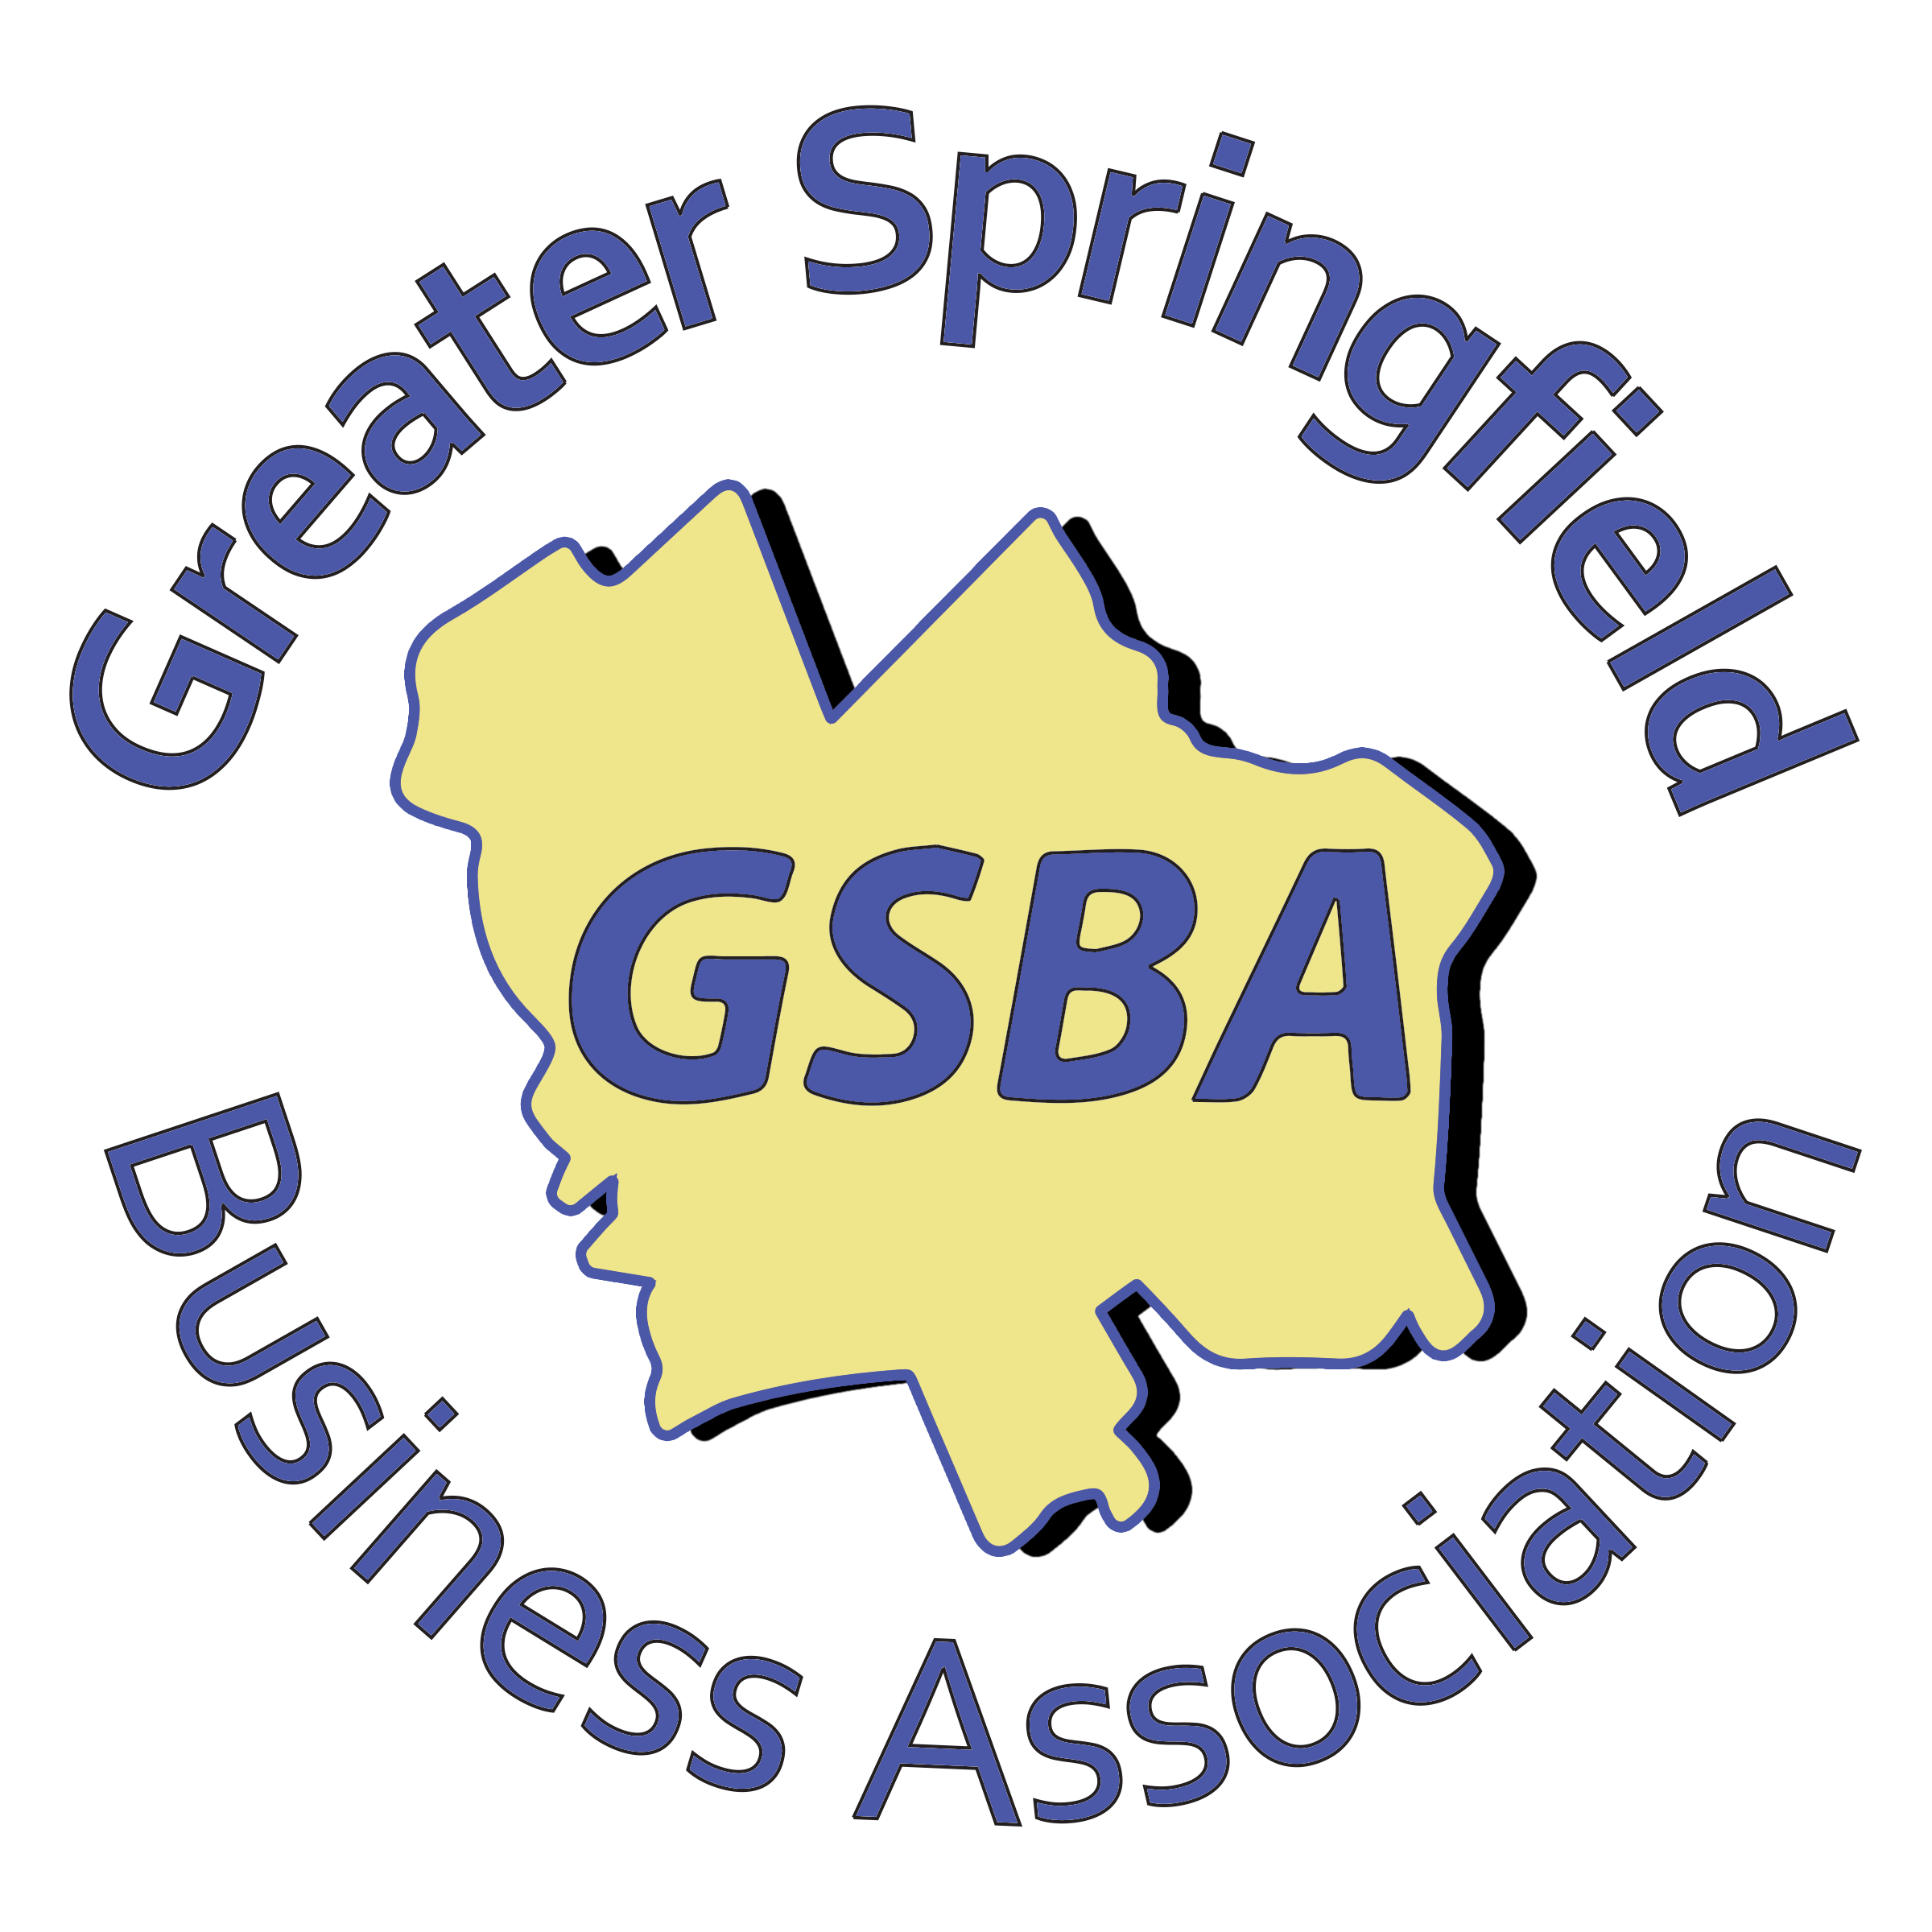 Greater Springfield Business Association